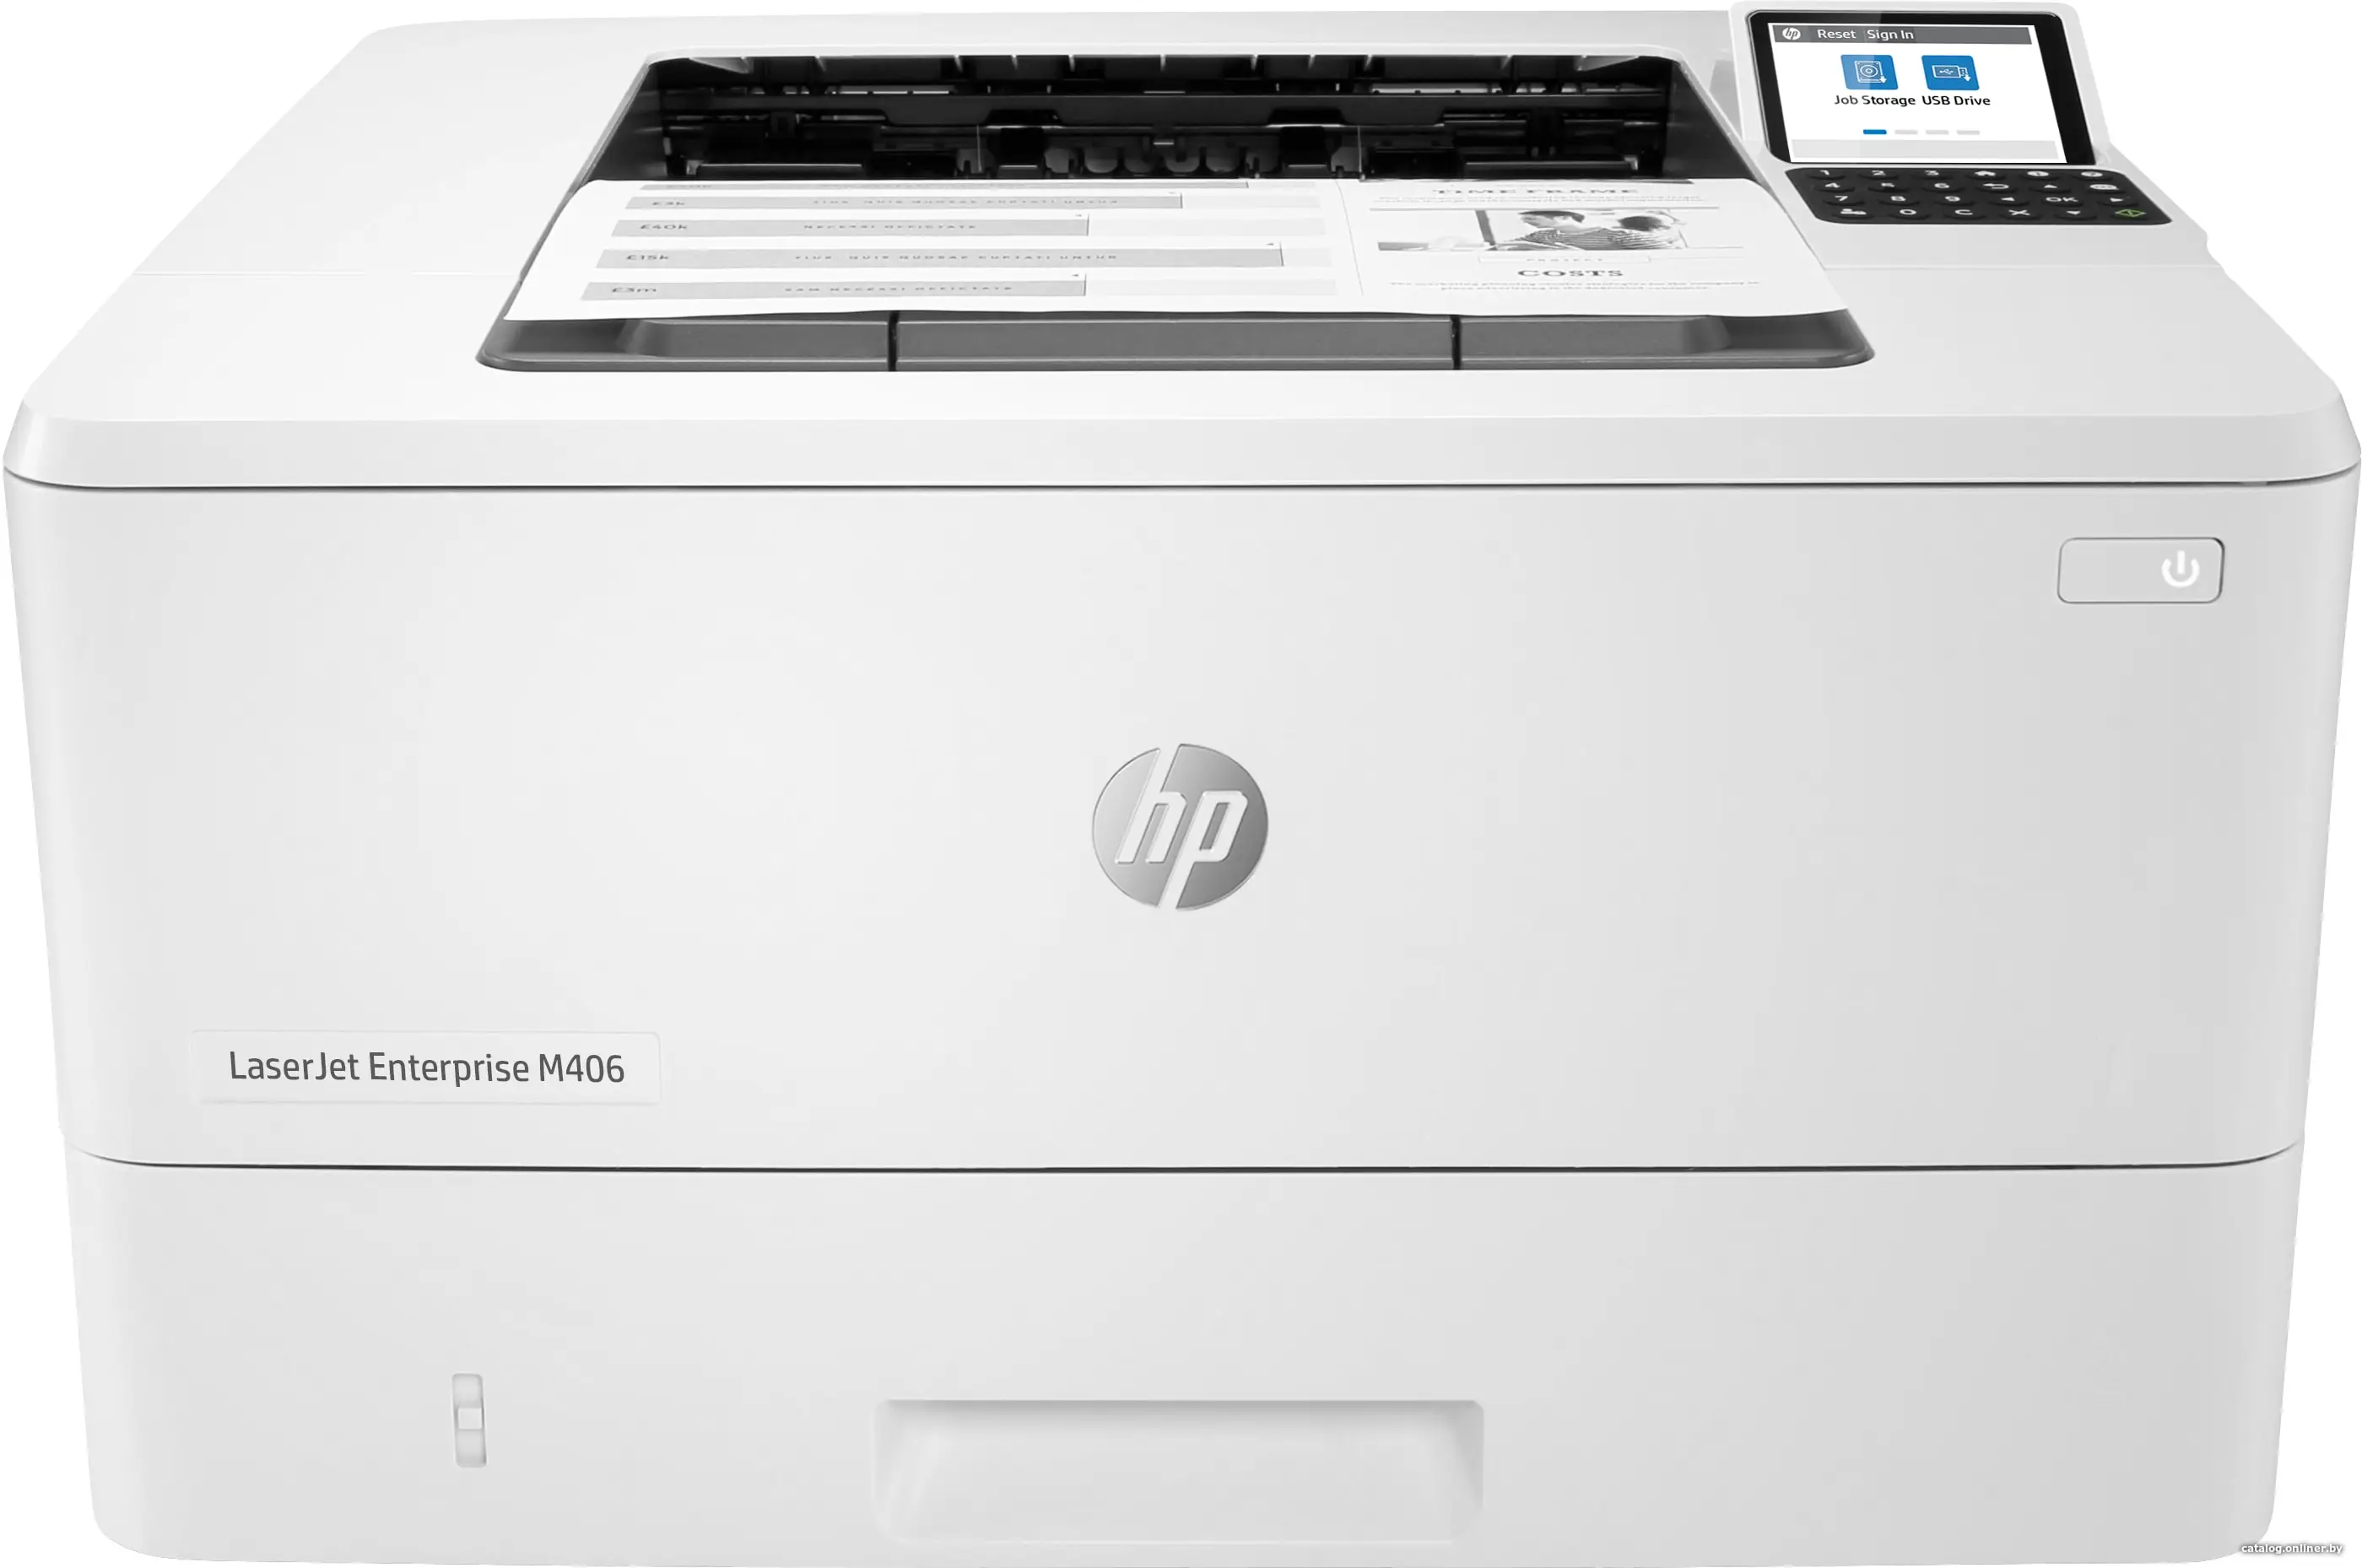 Купить Принтер HP LaserJet Enterprise M406dn, цена, опт и розница